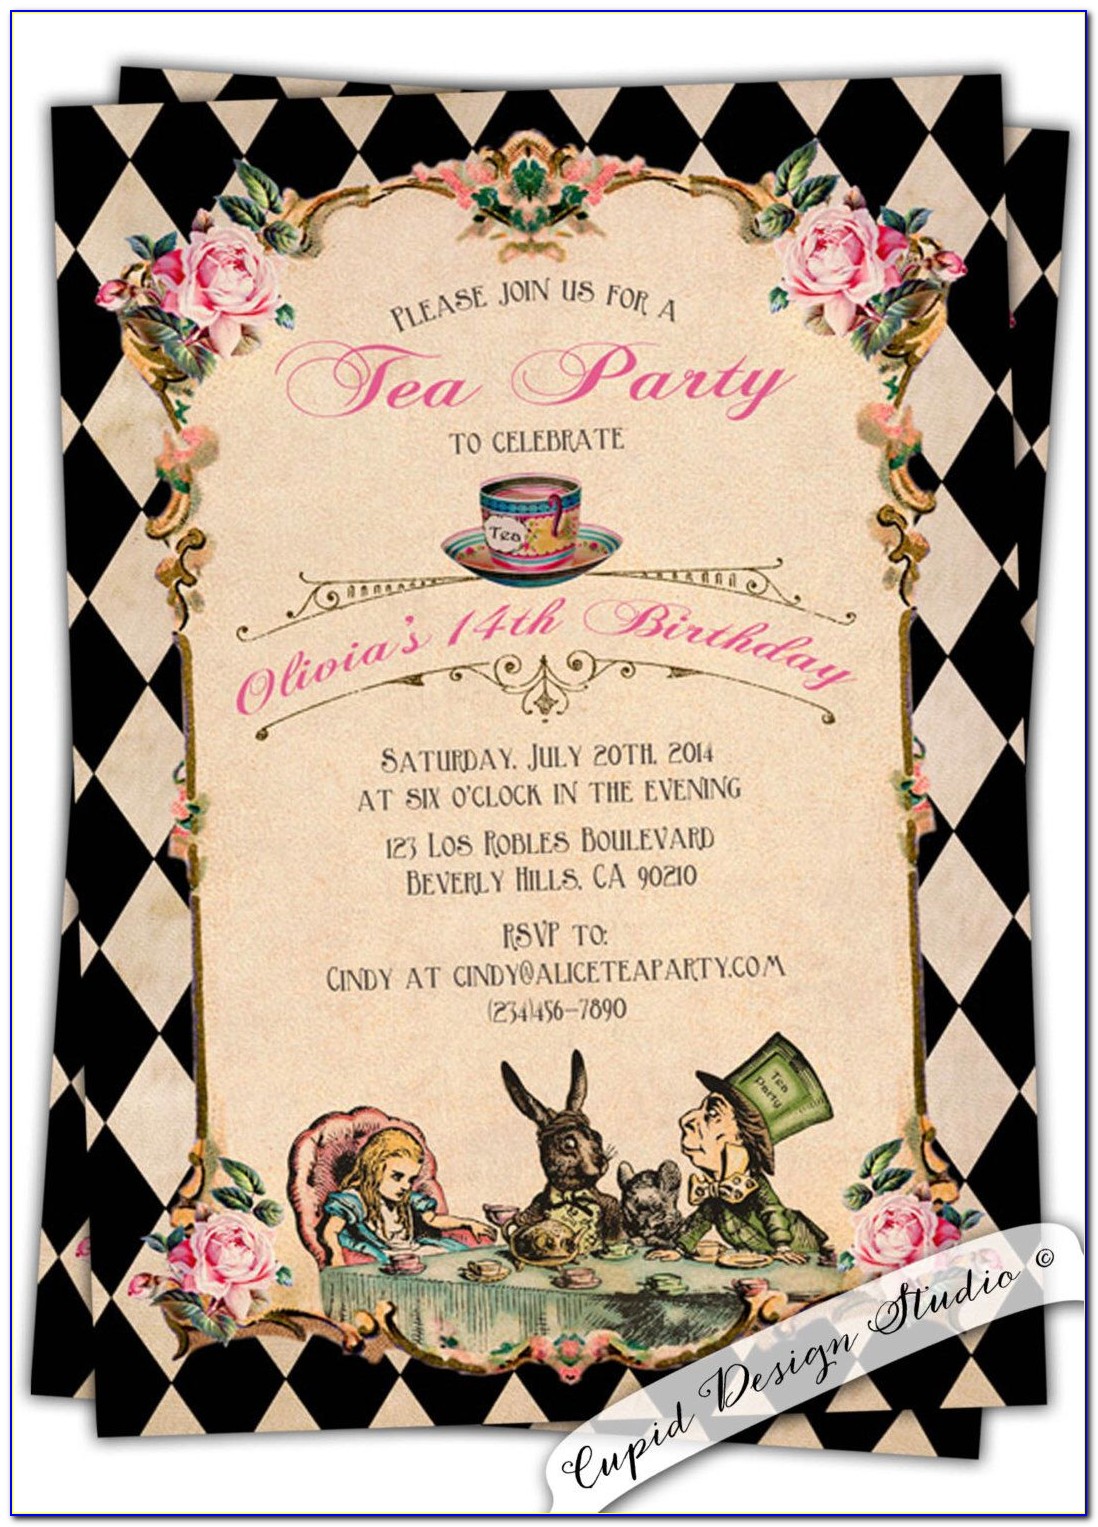 Alice In Wonderland Invitations Templates Free